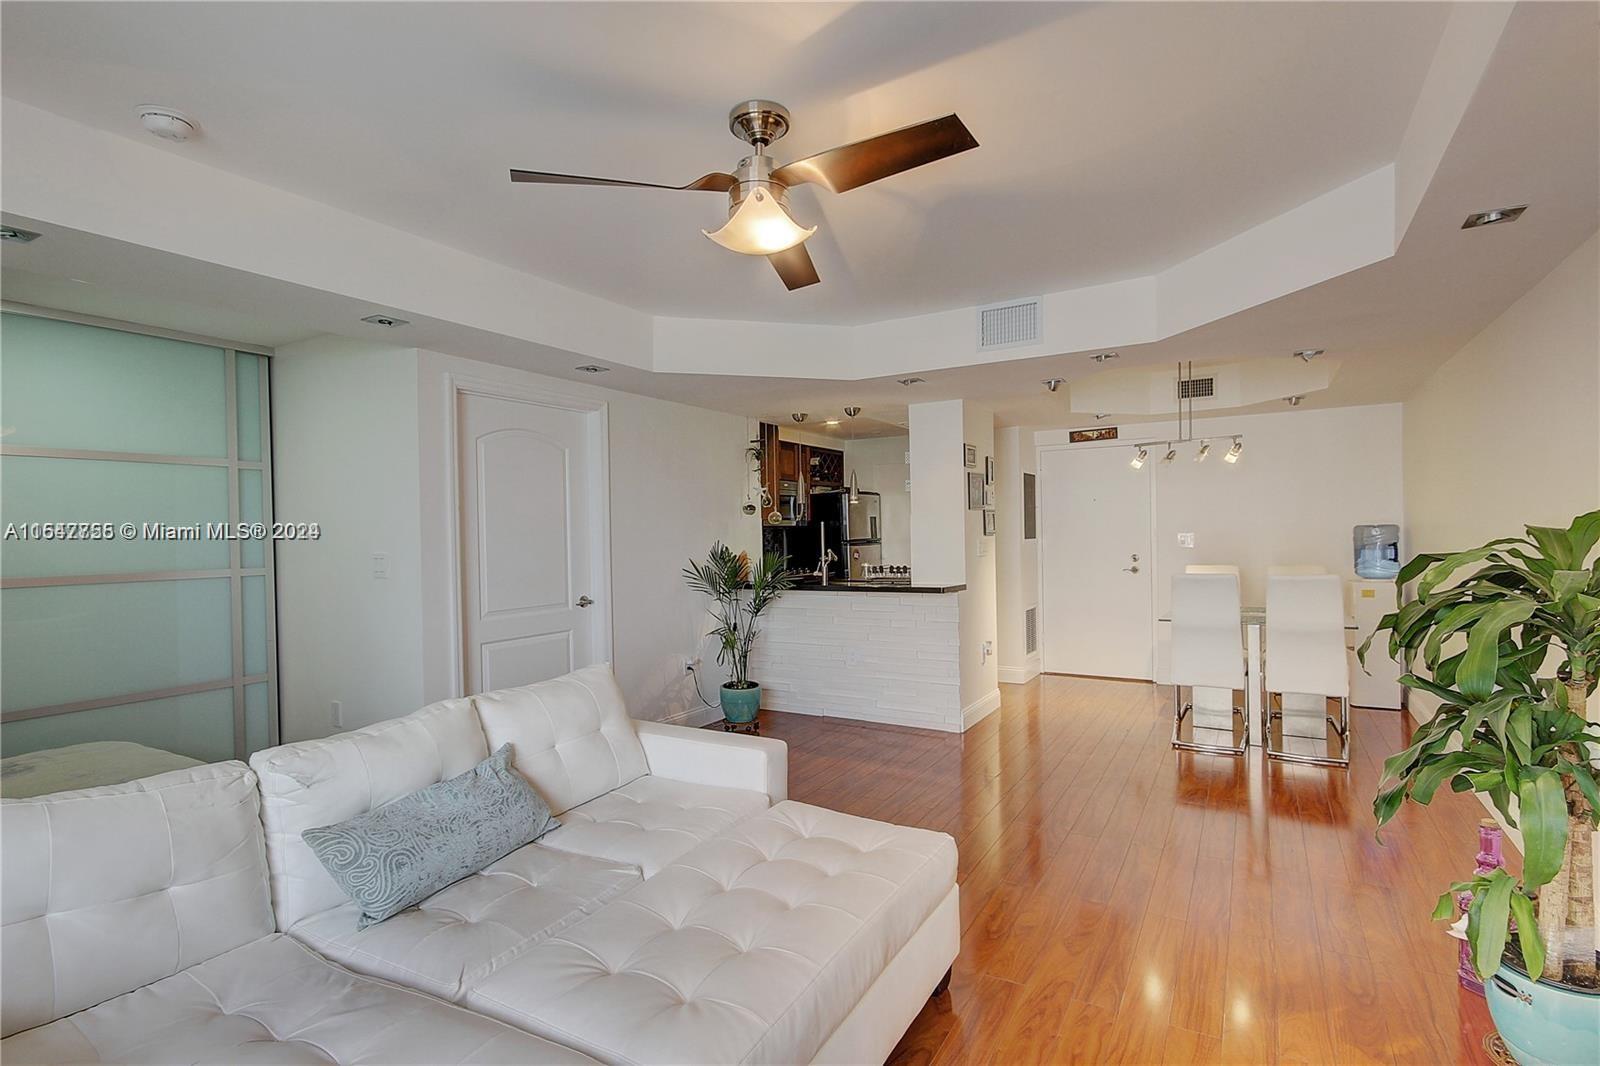 Rental Property at 800 West Ave 409, Miami Beach, Miami-Dade County, Florida - Bathrooms: 1  - $2,400 MO.